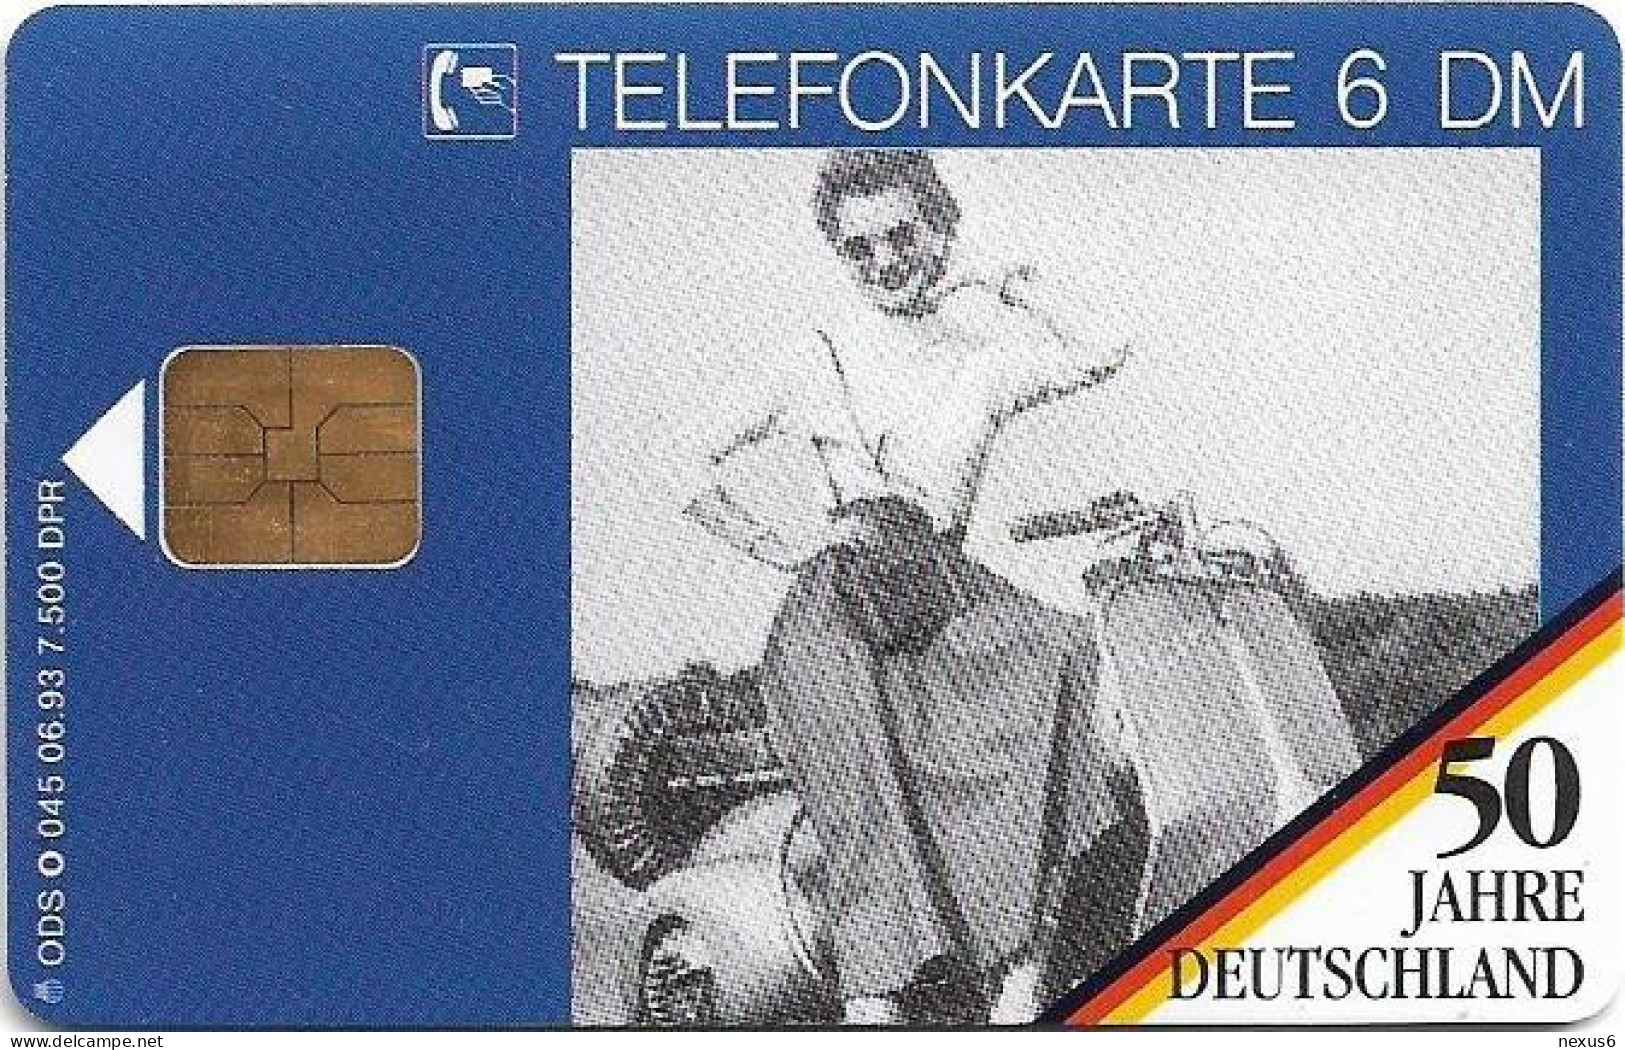 Germany - 50 Jahre Deutschland - Picknick Mit Motorroller 2 - O 0045 - 06.1993, 6DM, 7.500ex, Mint - O-Series : Customers Sets